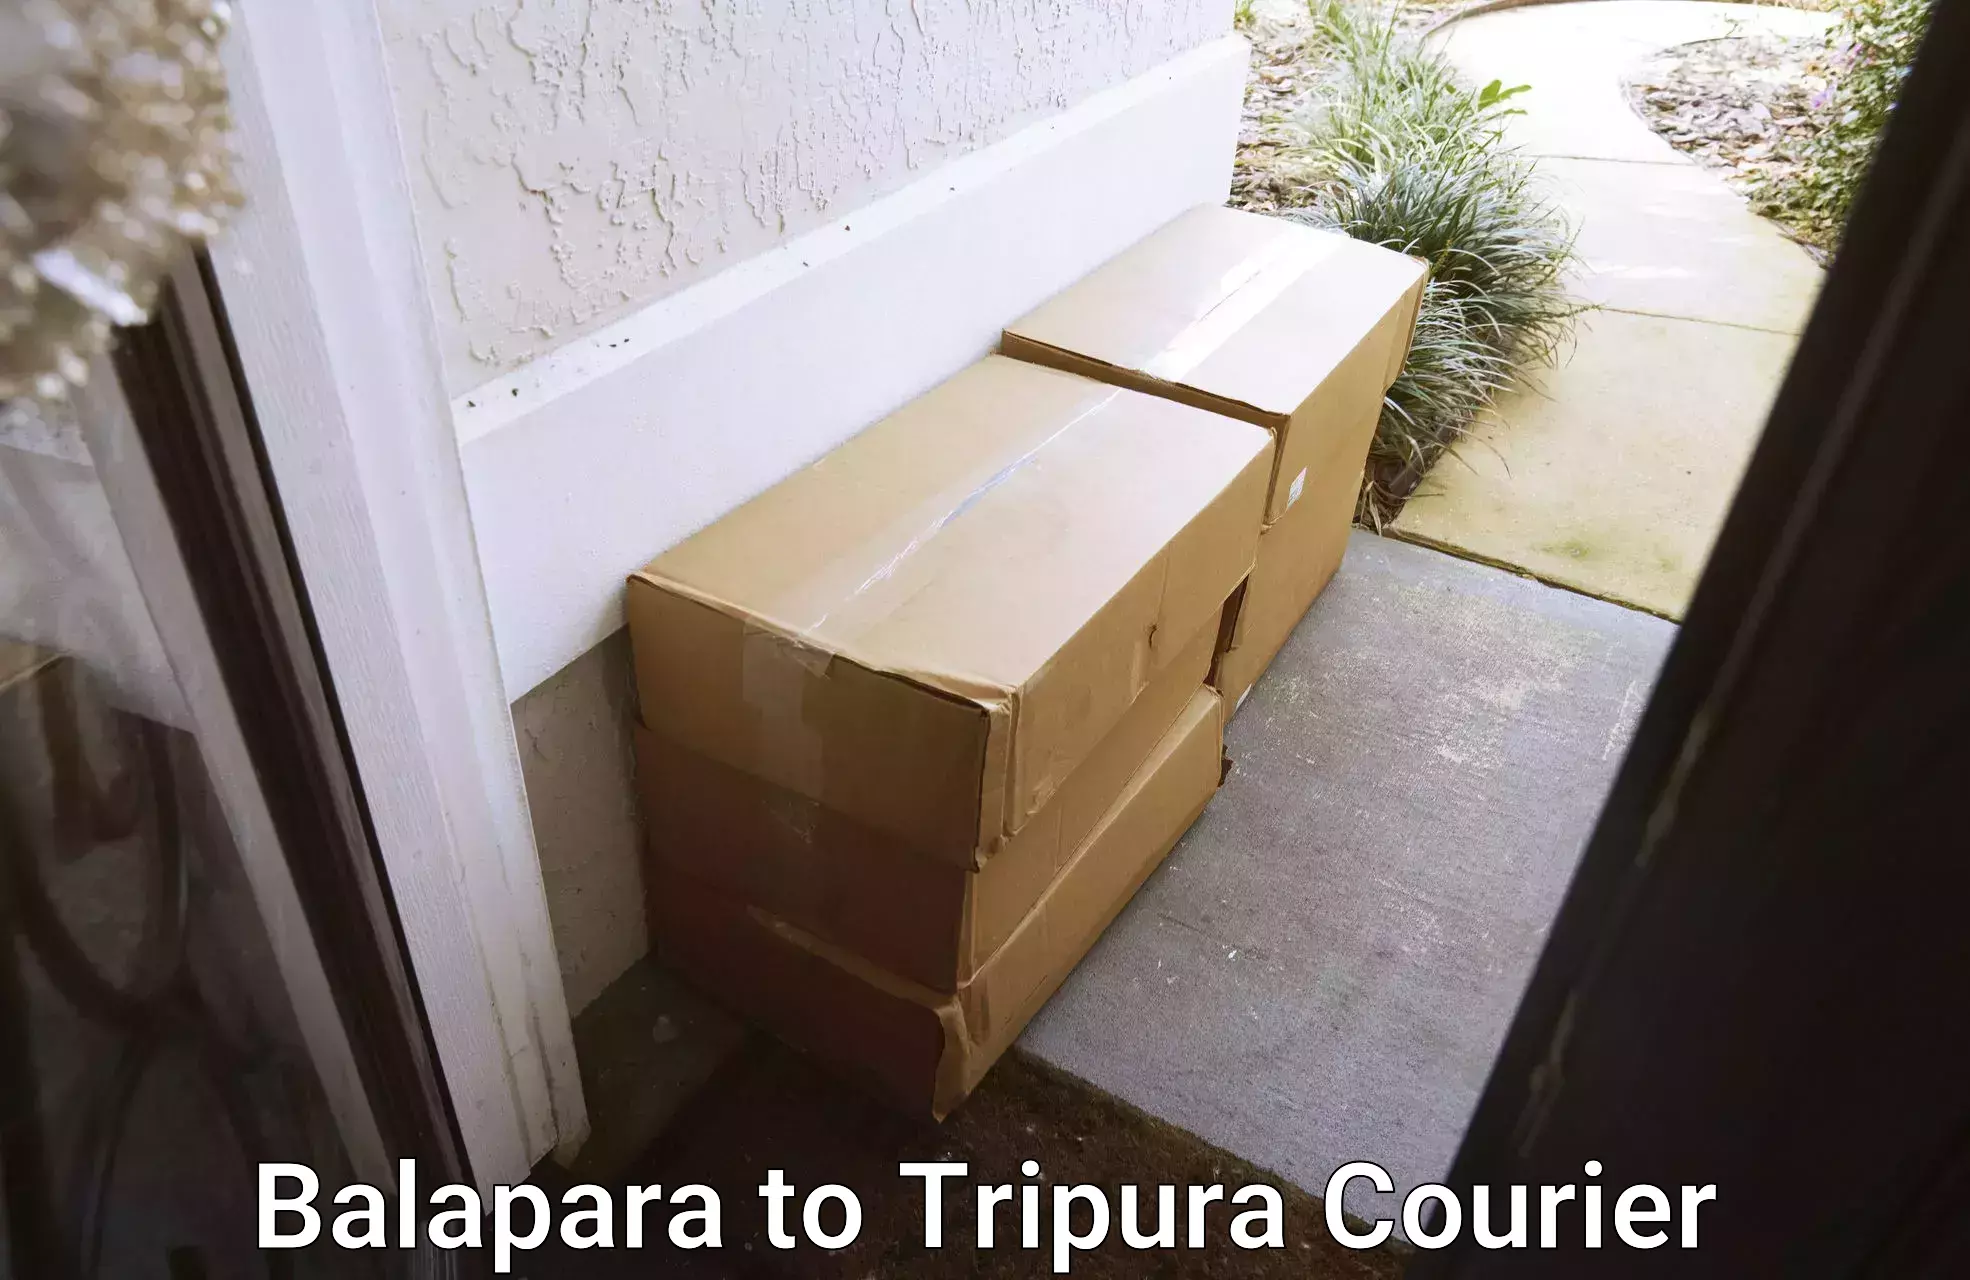 Bulk courier orders Balapara to Udaipur Tripura